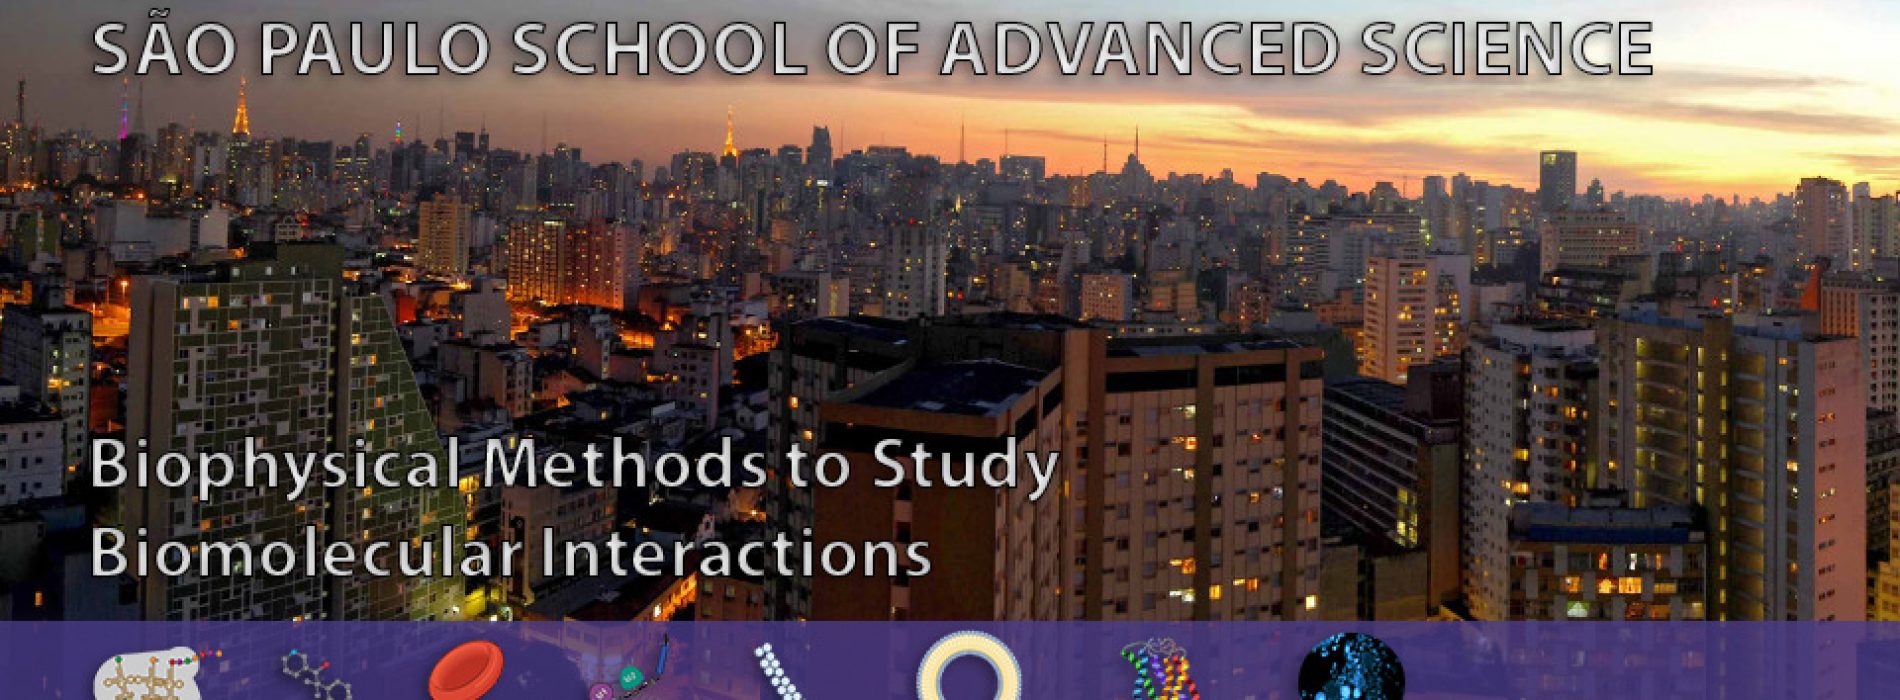 Programa curso São Paulo Advanced School of Science on Biophysical Methods to Study Biomolecular Interactions